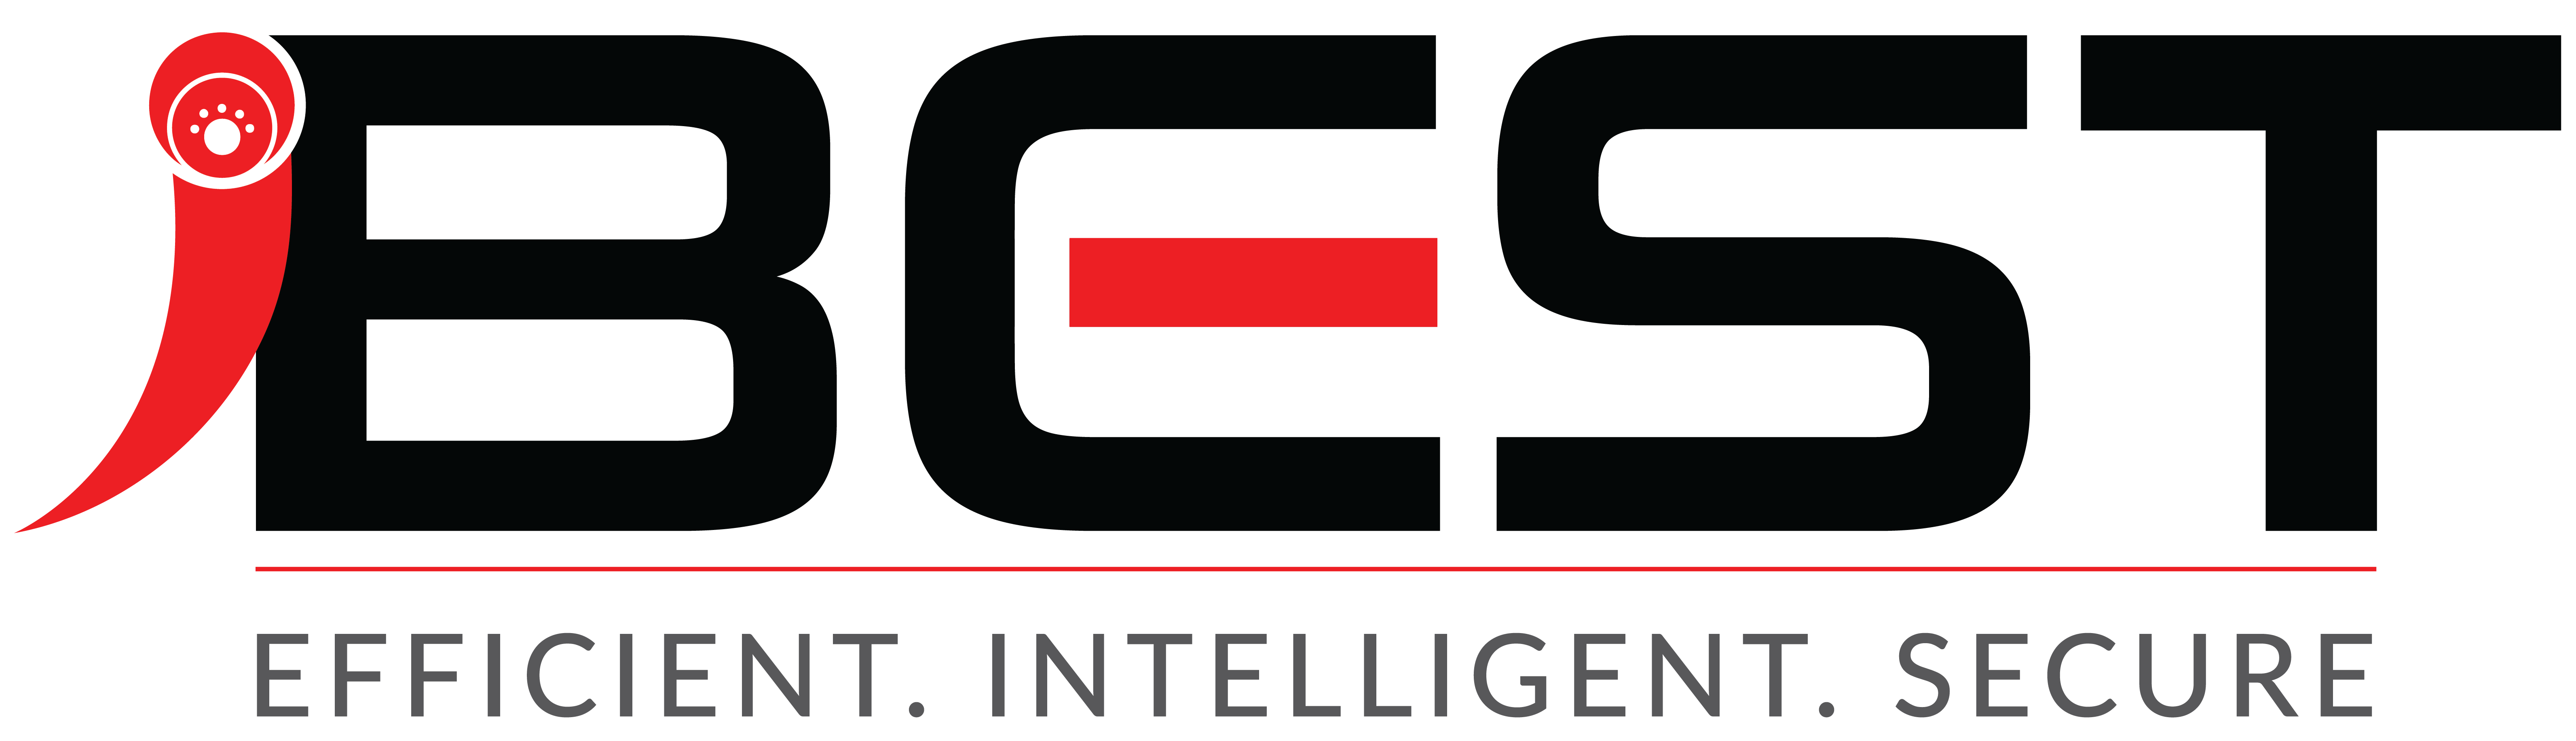 iBest Logo